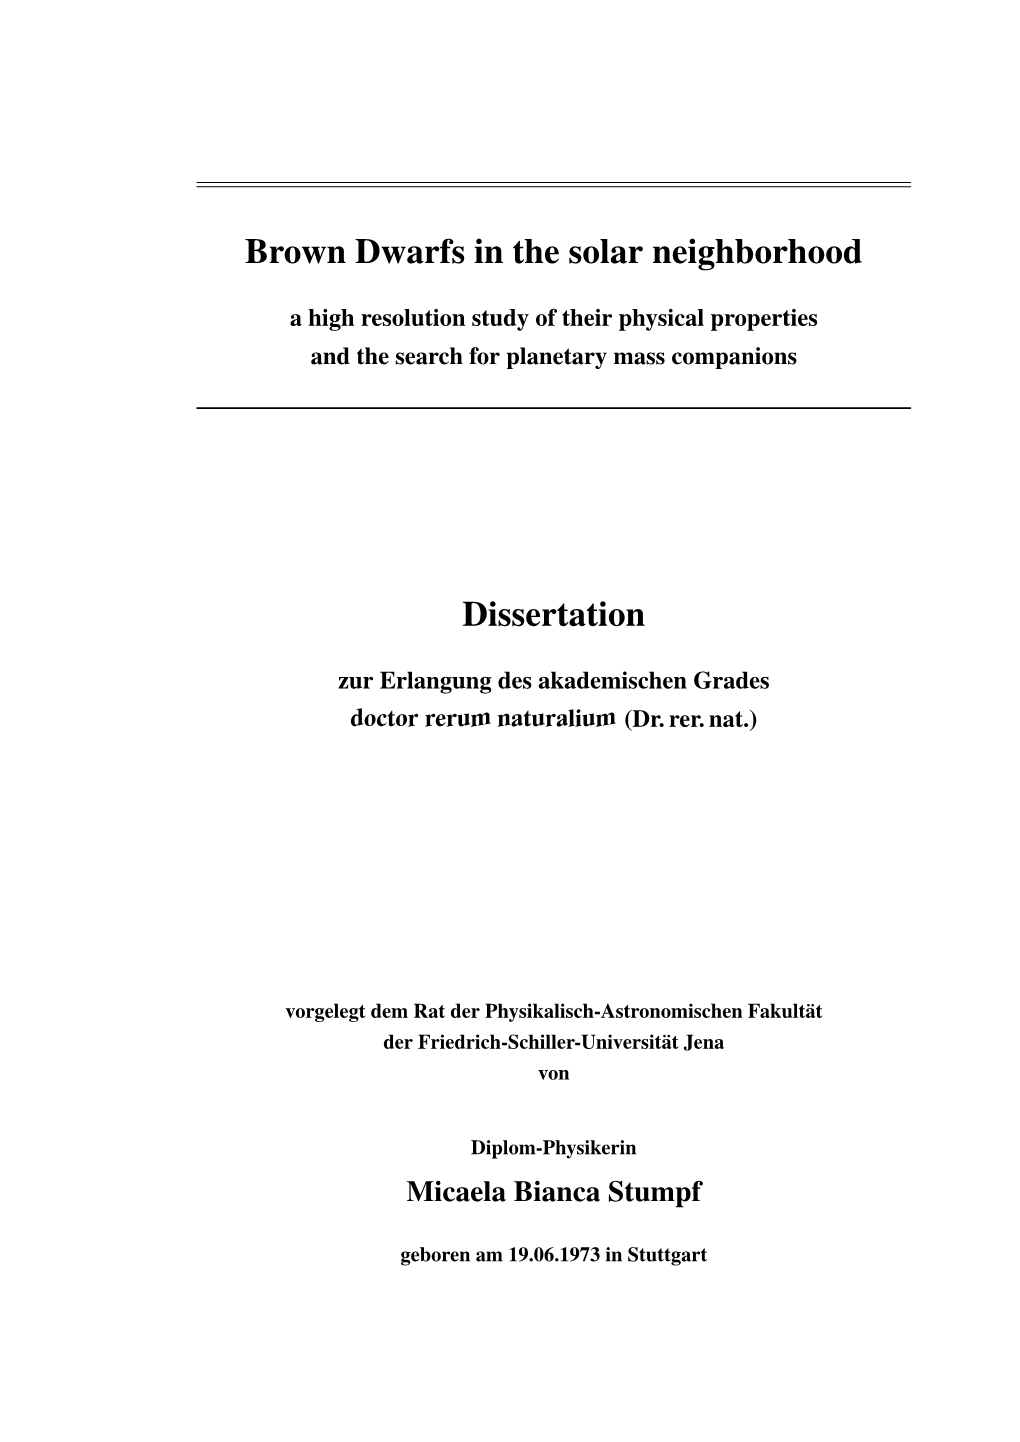 Brown Dwarfs in the Solar Neighborhood Dissertation